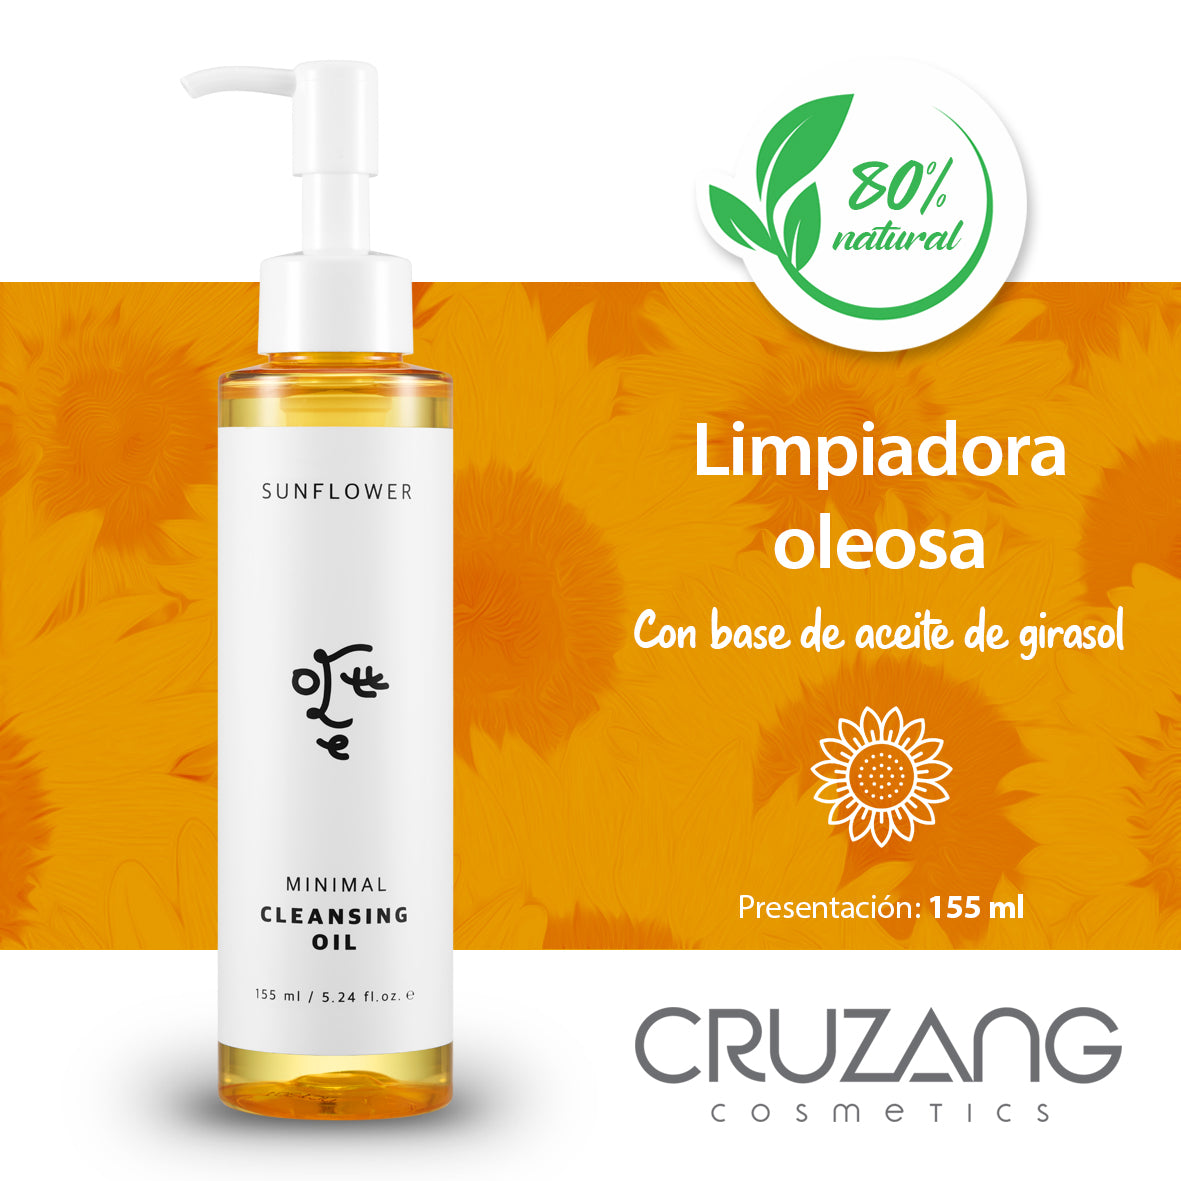 Sunflower minimal cleansing oil - Limpiadora oleosa con base de aceite de girasol